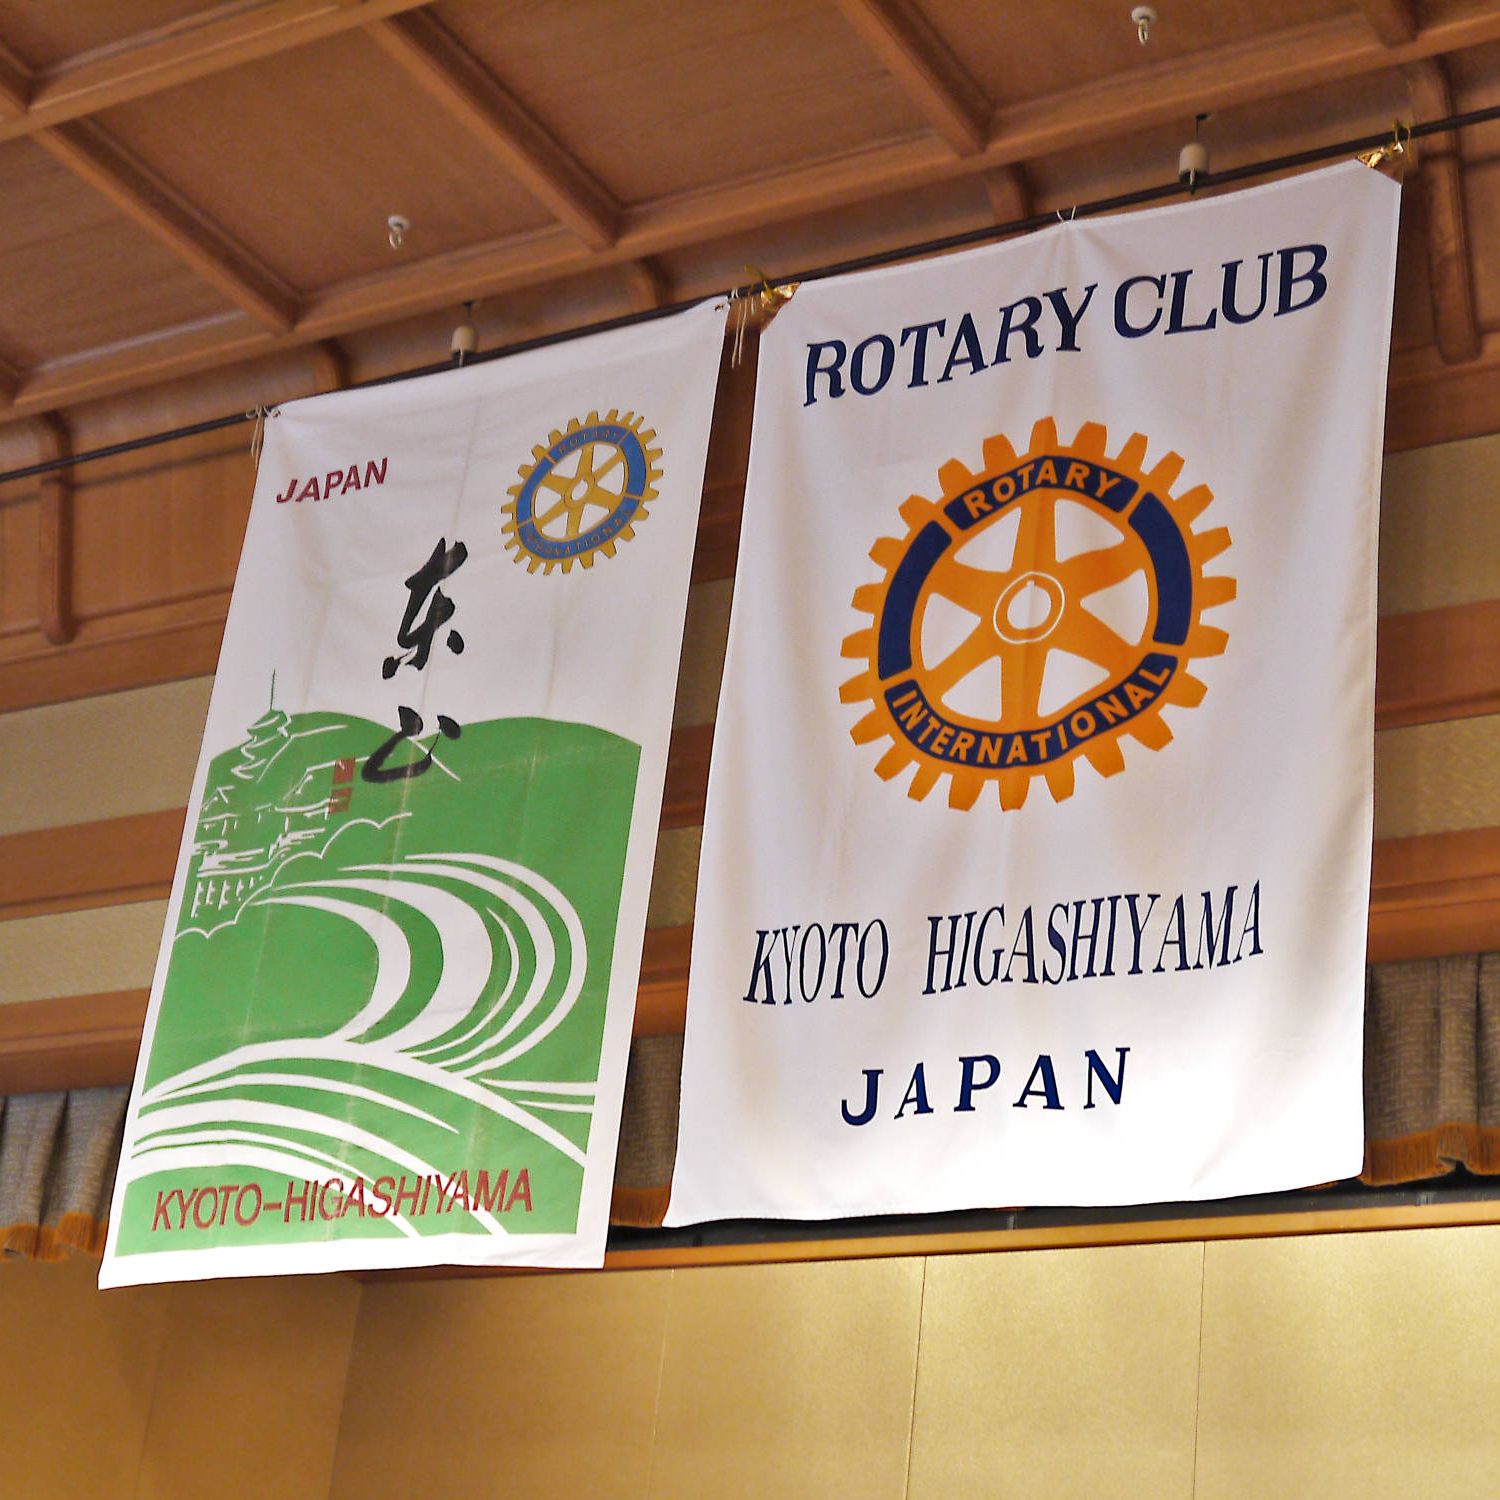 ROTARY CLUB OF KYOTO-HIGASHIYAMA